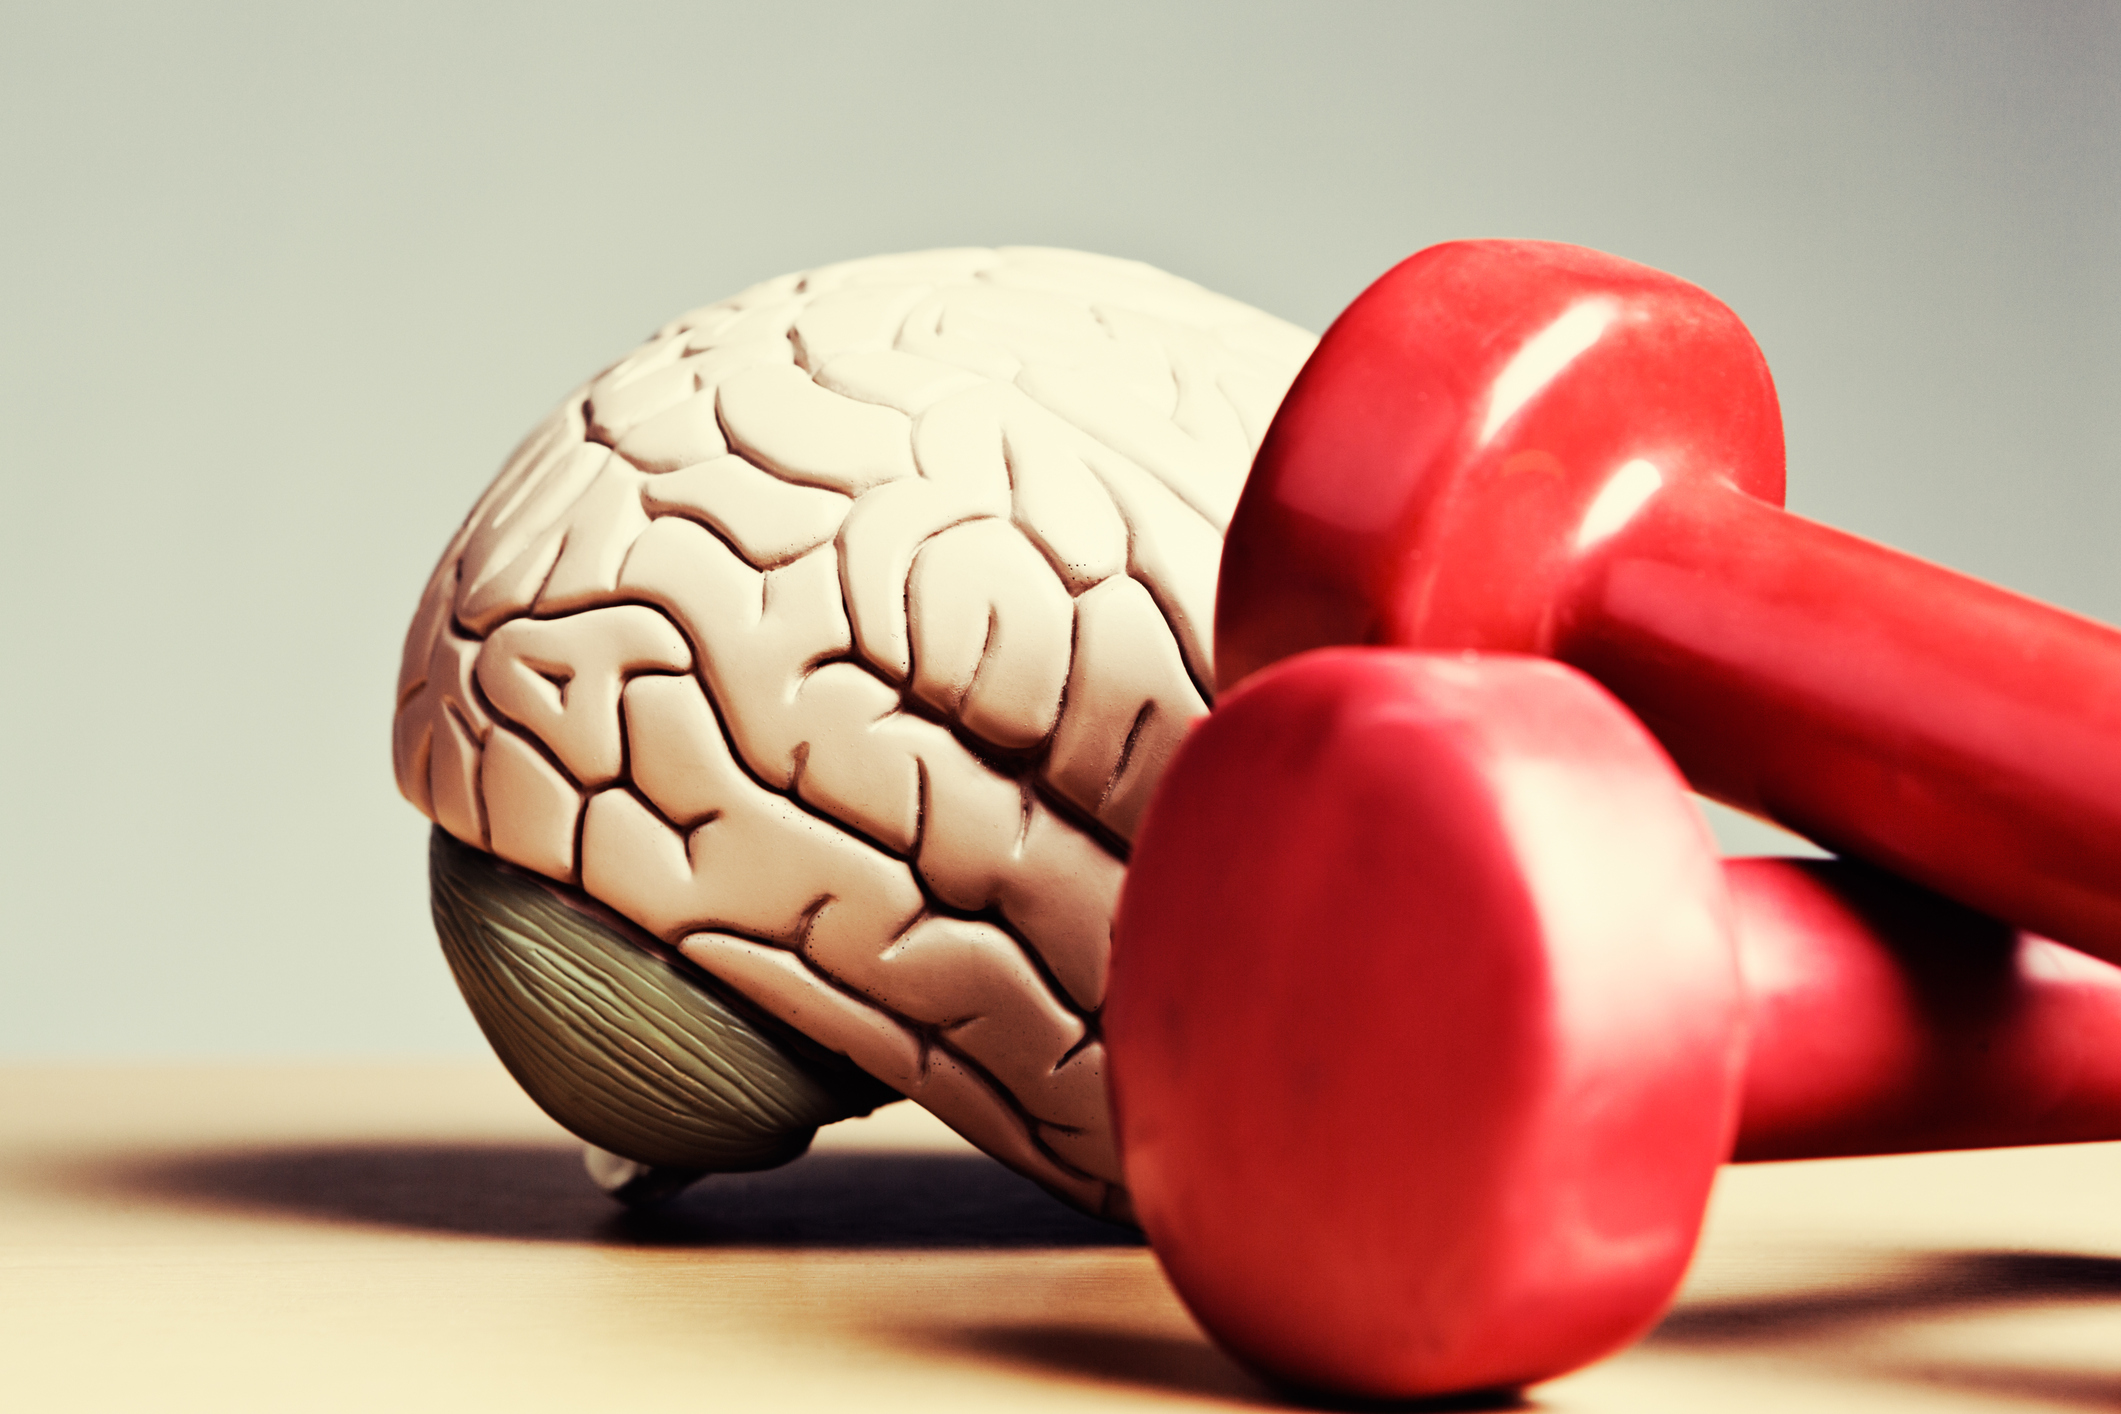 Brain effect. Мозг с боксерскими перчатками. Тренування мозку. Фитнес для мозга картинки. Сердце и мозг картинки.